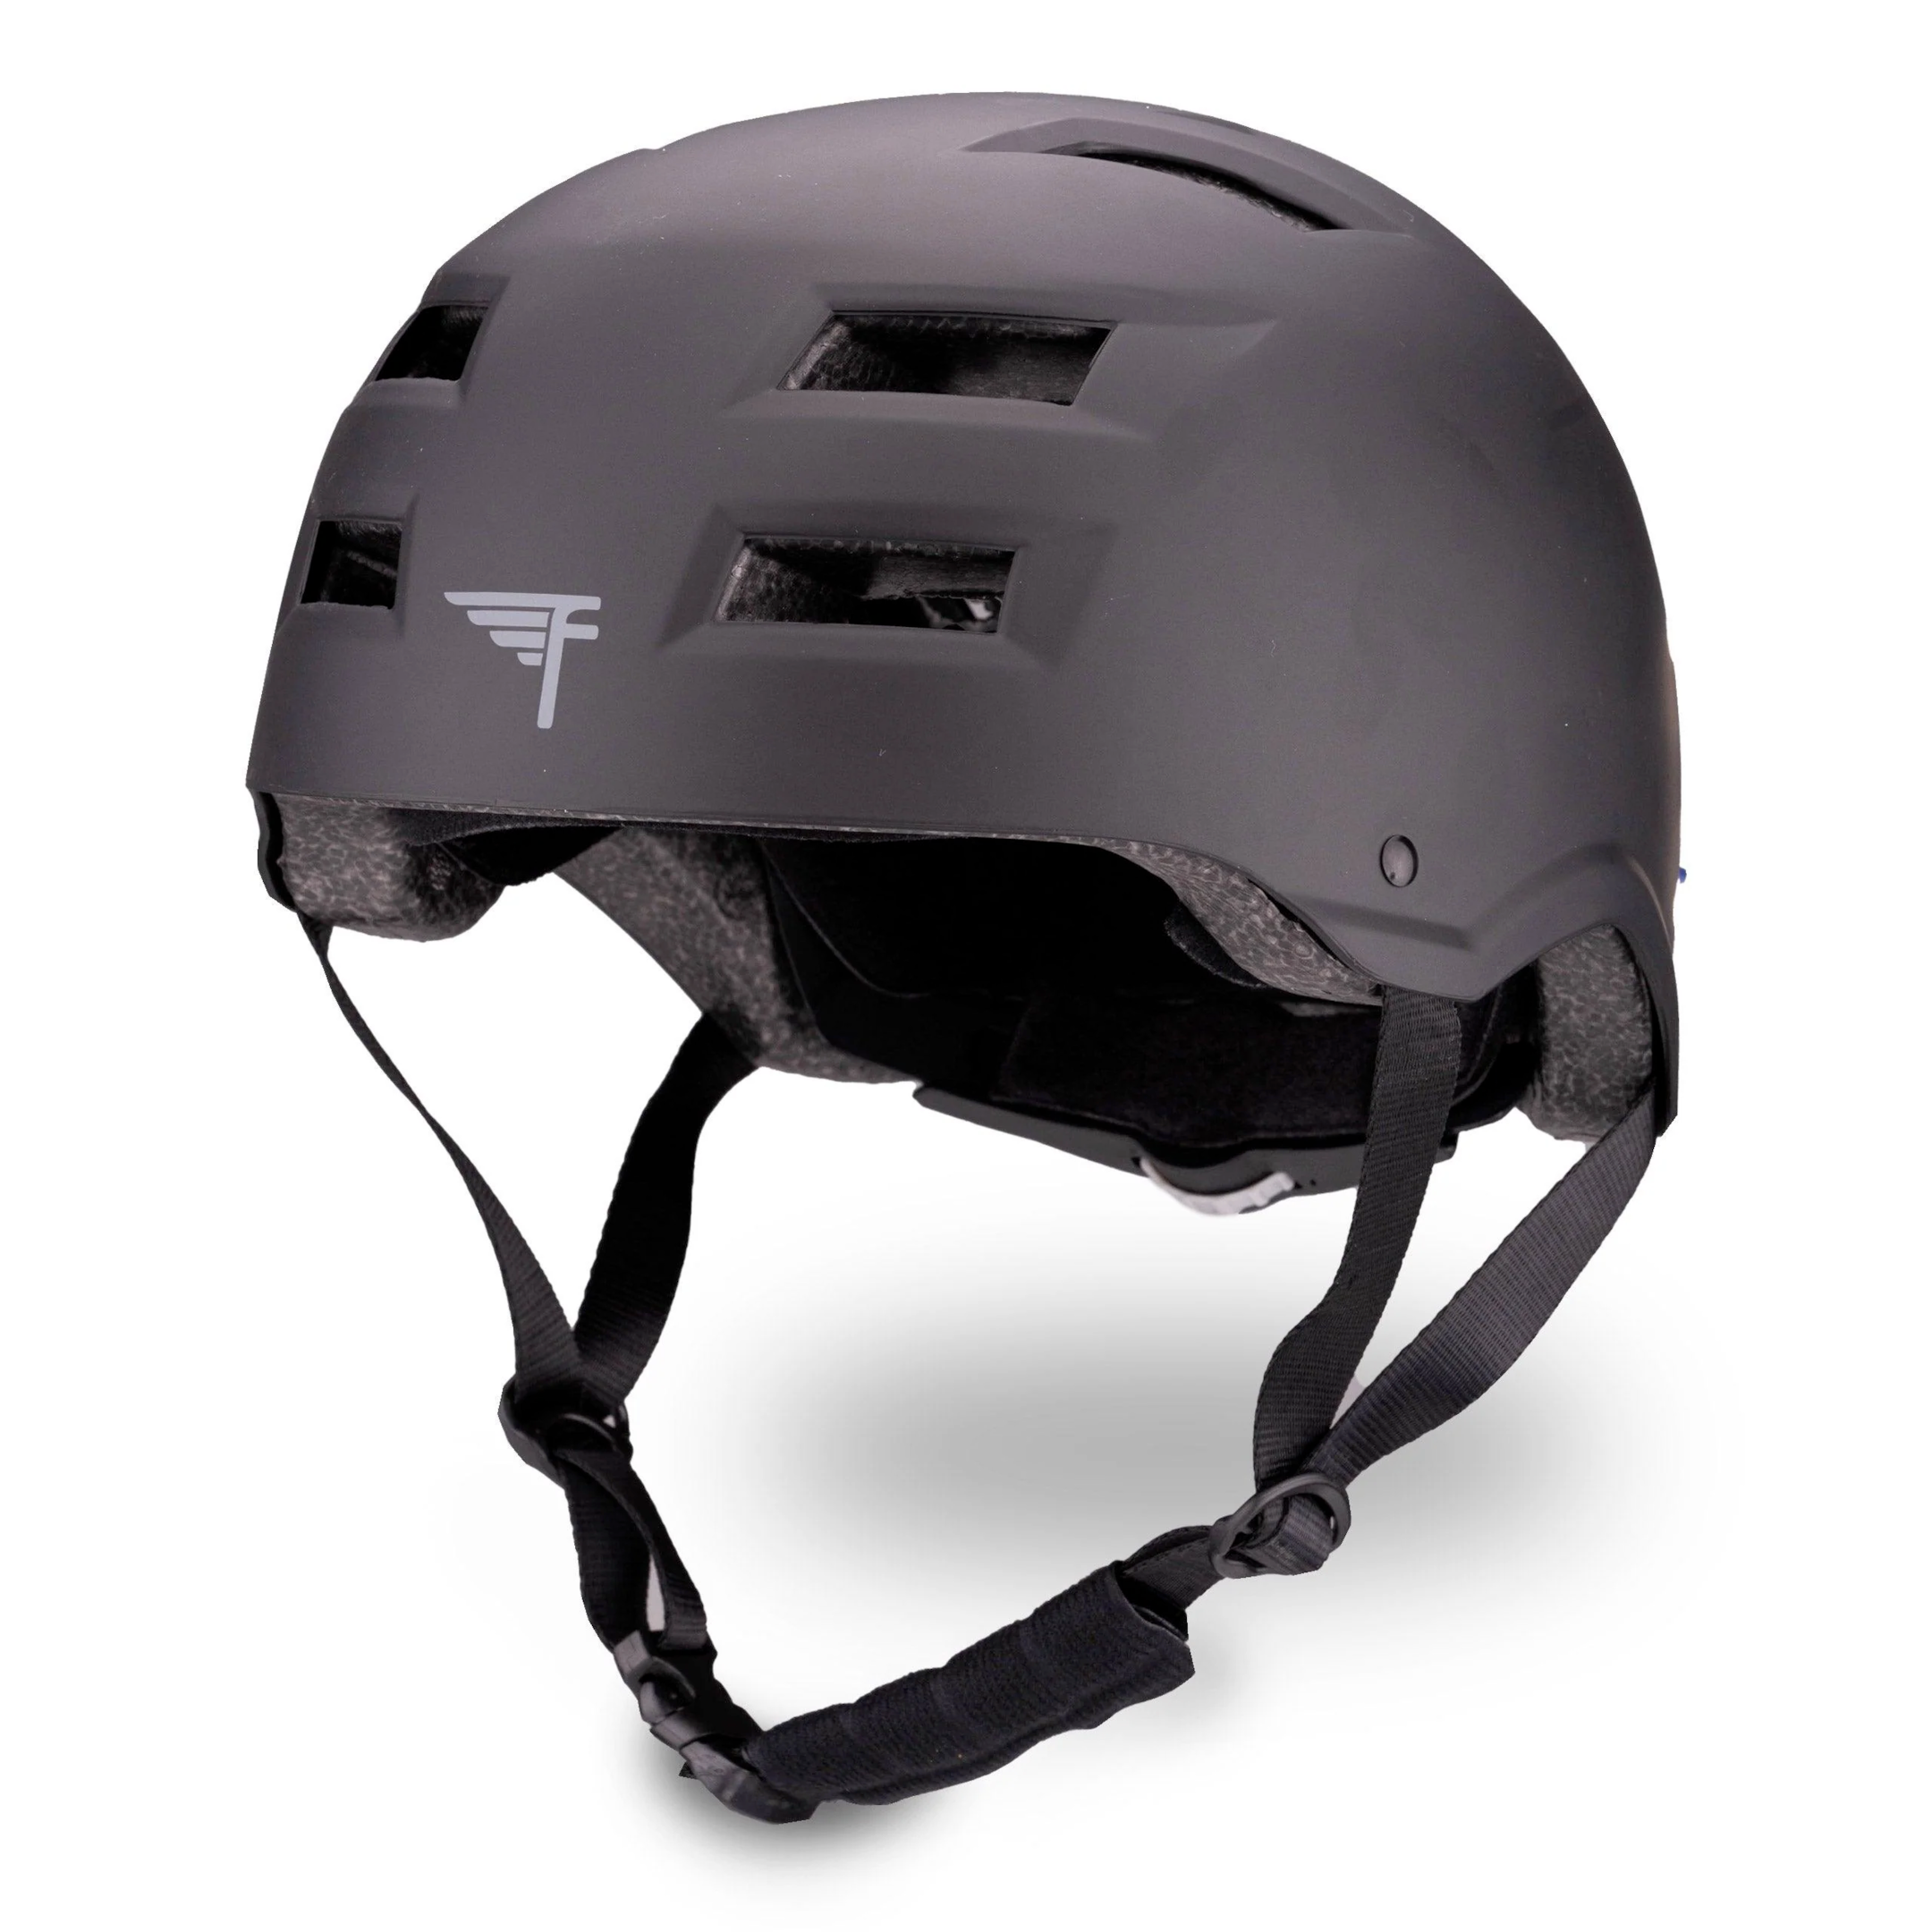 Flybar Multi sport adjustable helmet